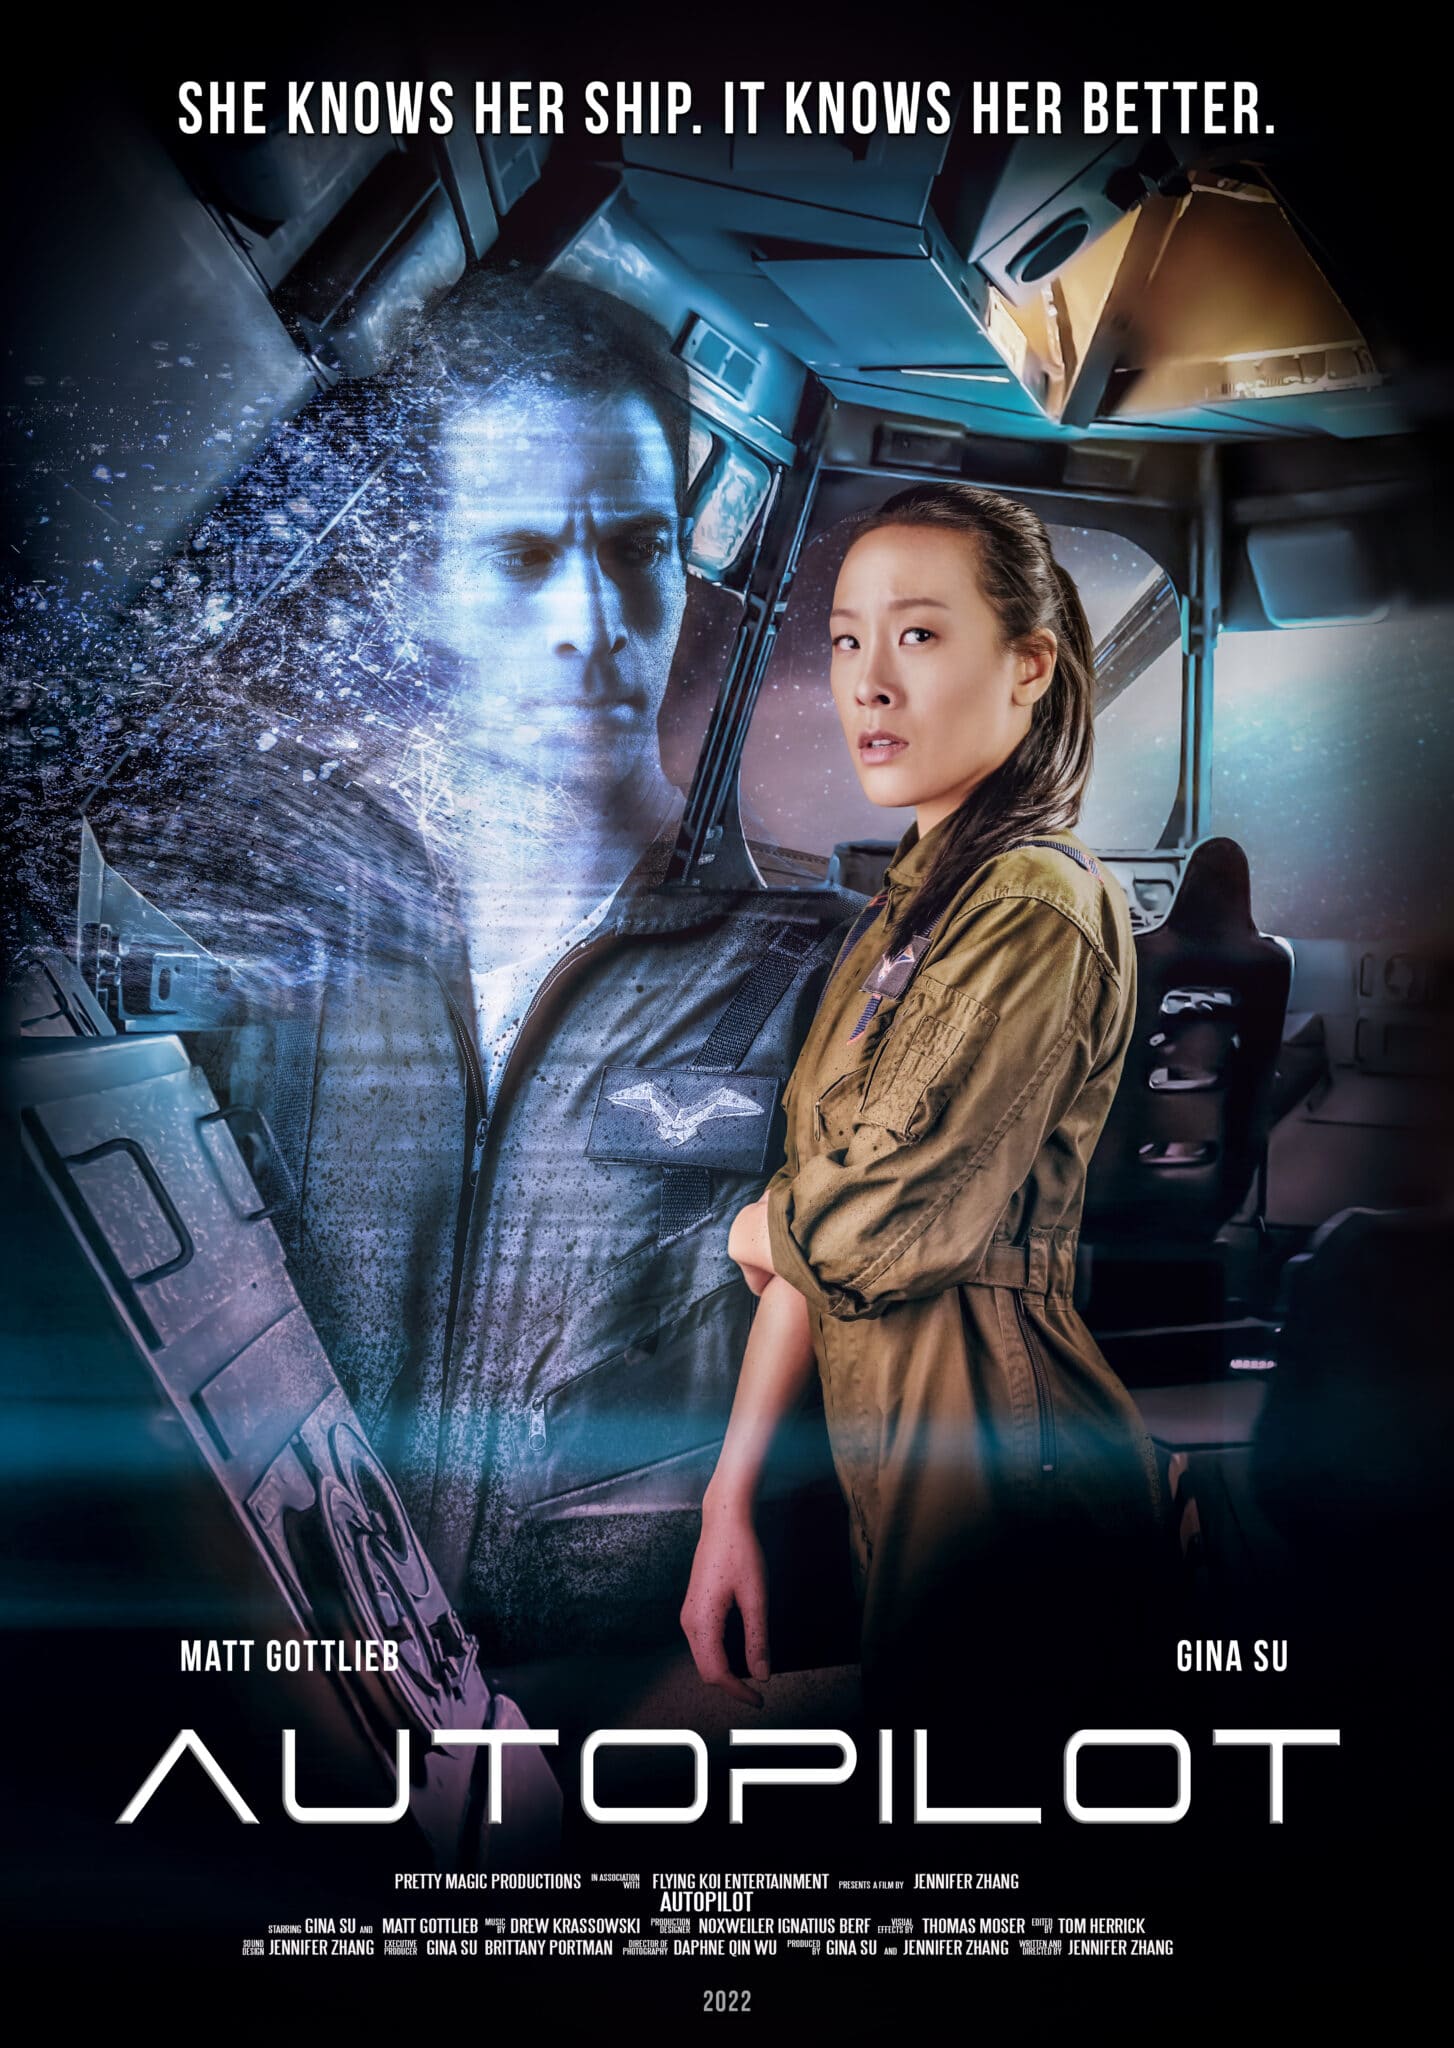 the poster for Jennifer Zhang's Autopilot